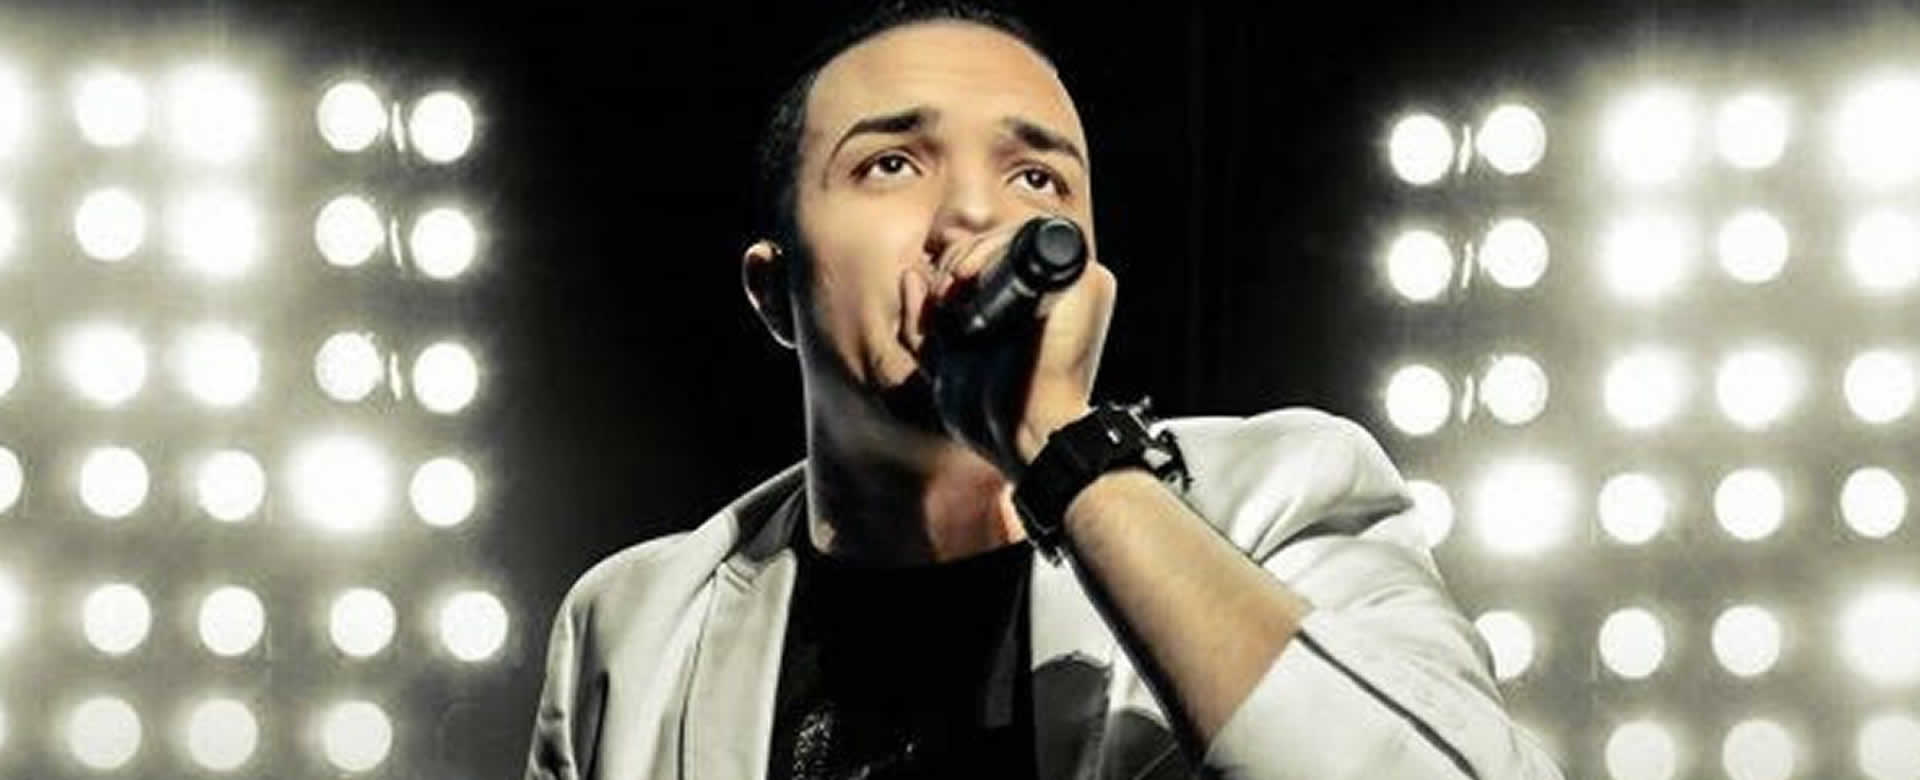 Llega a Nicaragua el cantante puertorriqueño Alex Zurdo